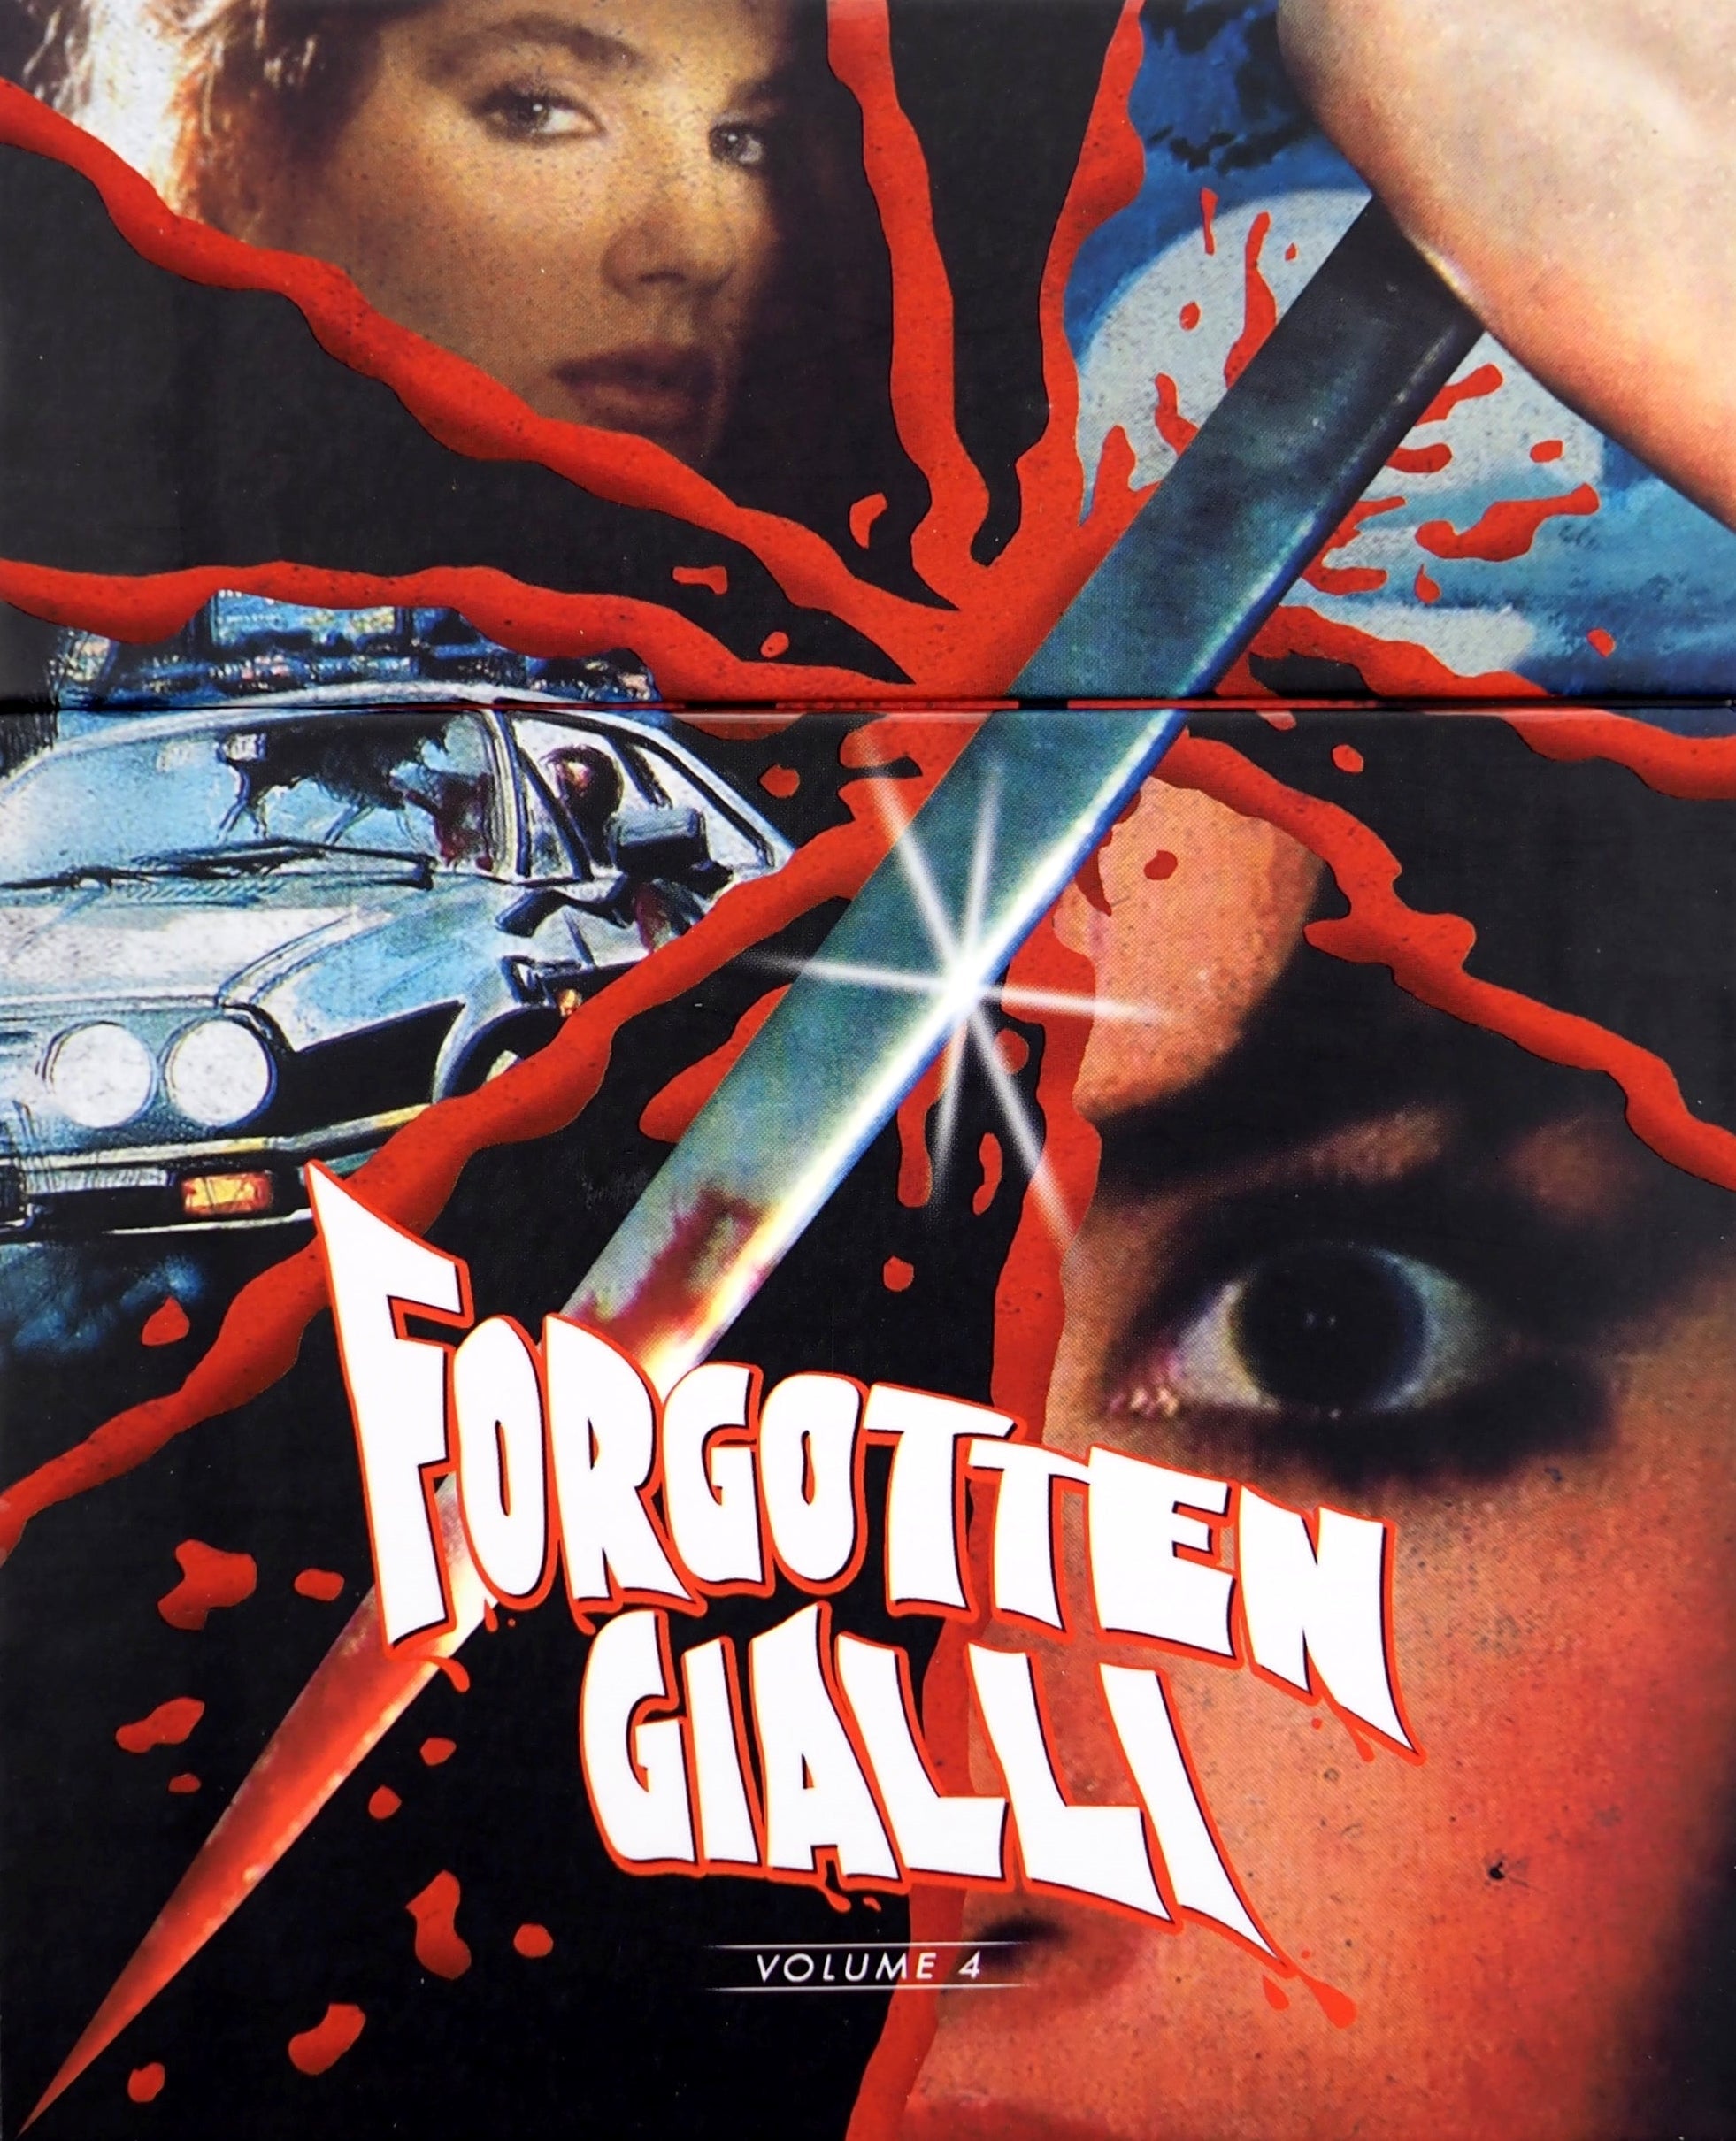 Forgotten Gialli Volume 4 (Limited Edition) Blu-Ray Blu-Ray